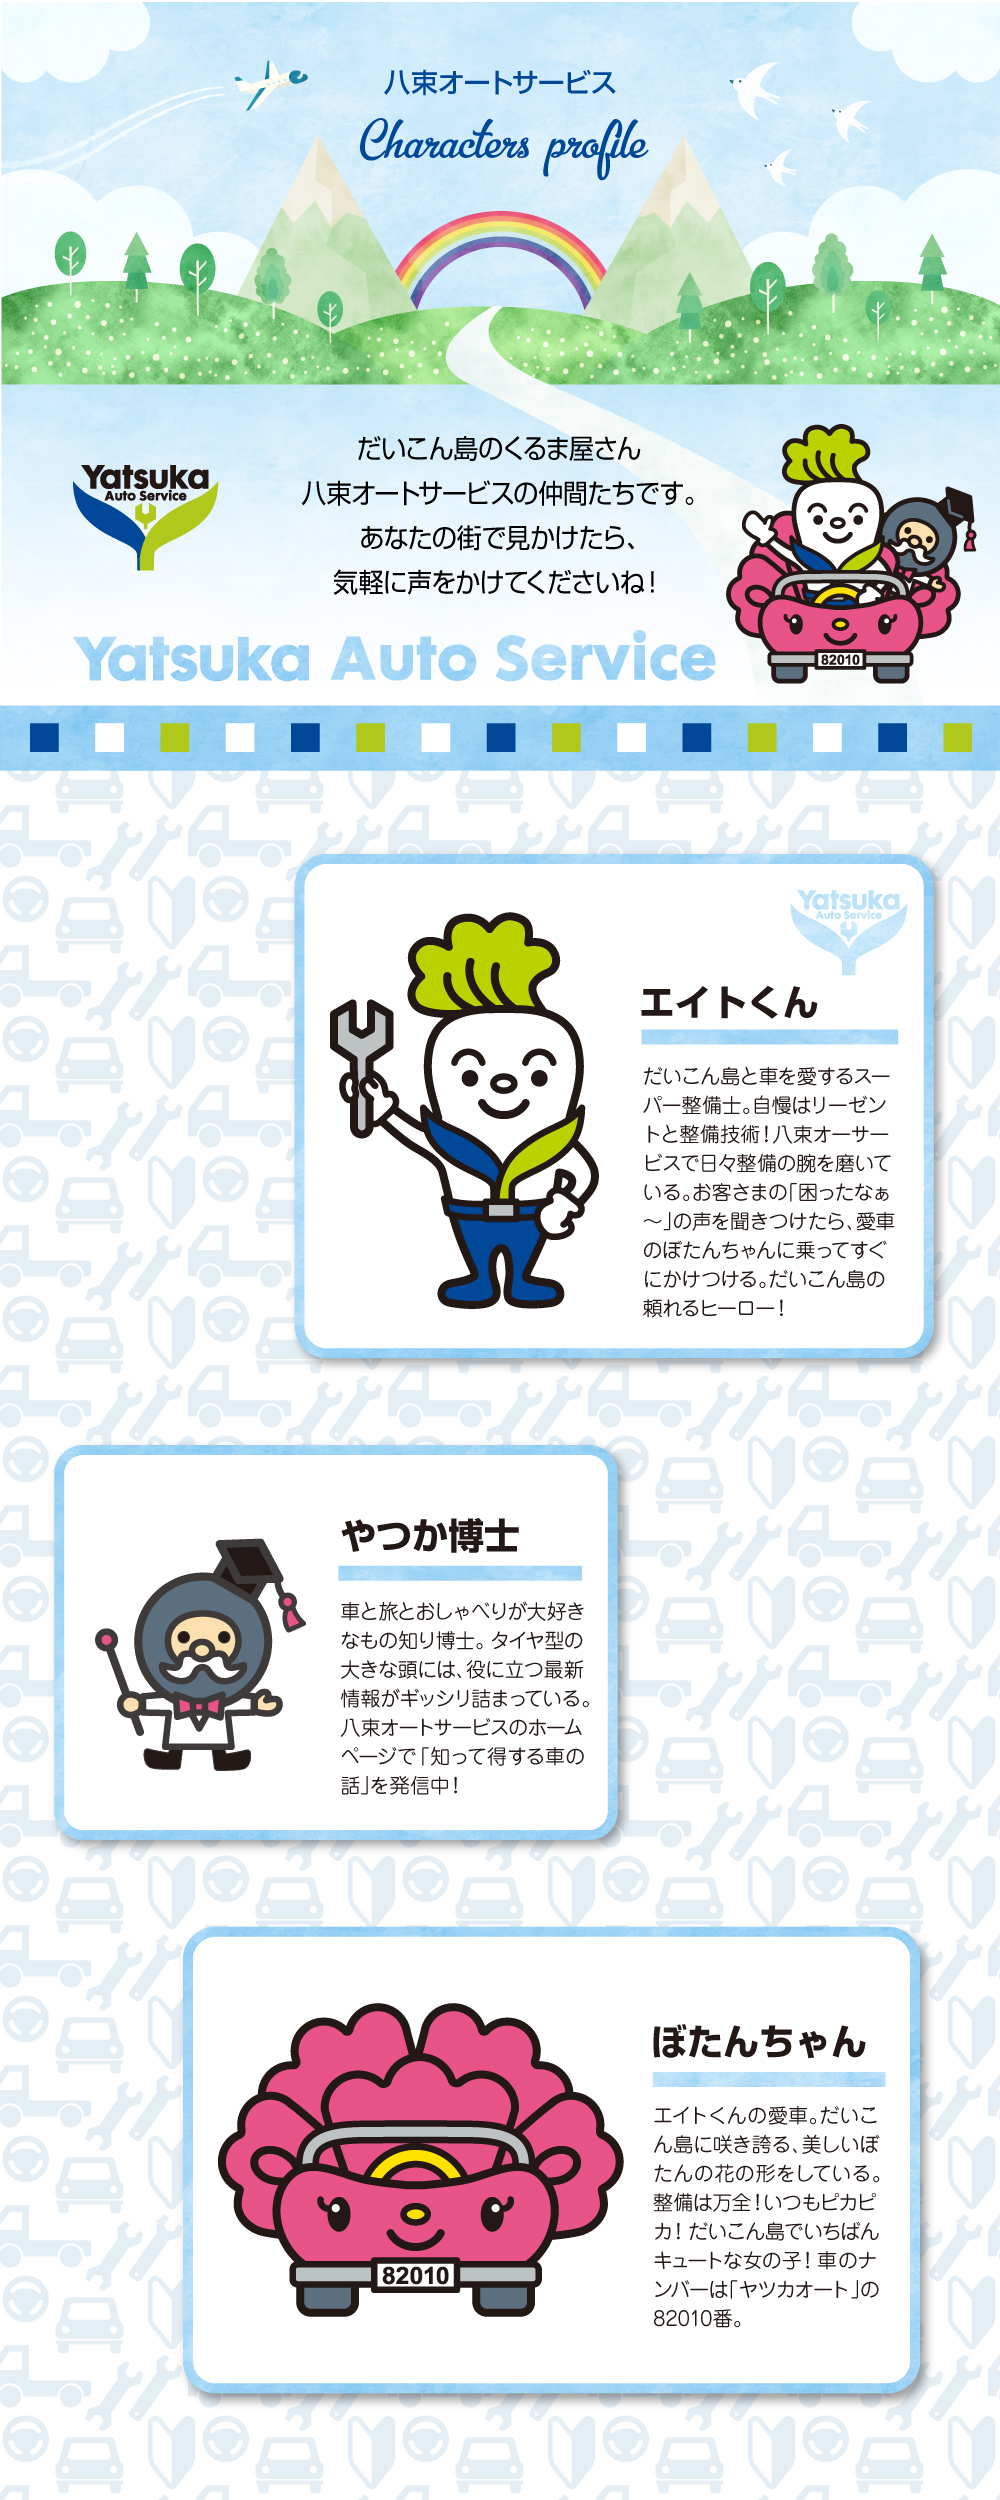 characters-profile.jpg